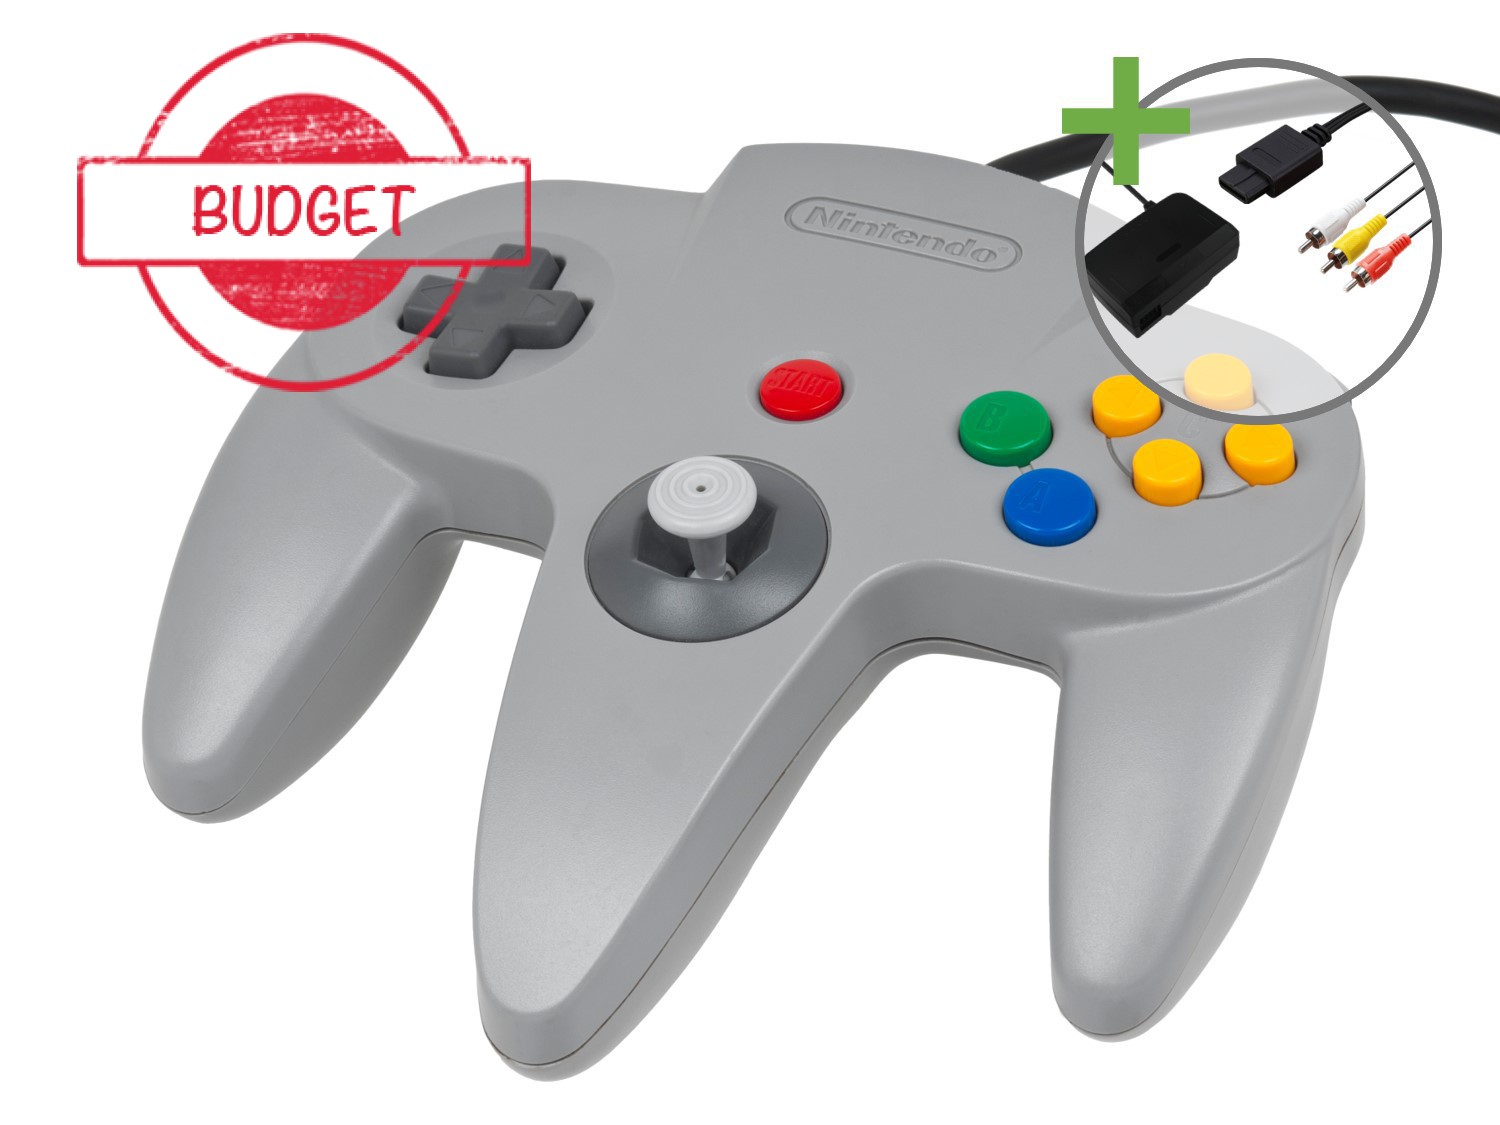 Nintendo 64 Starter Pack - Control Deck Edition - Budget - Nintendo 64 Hardware - 2